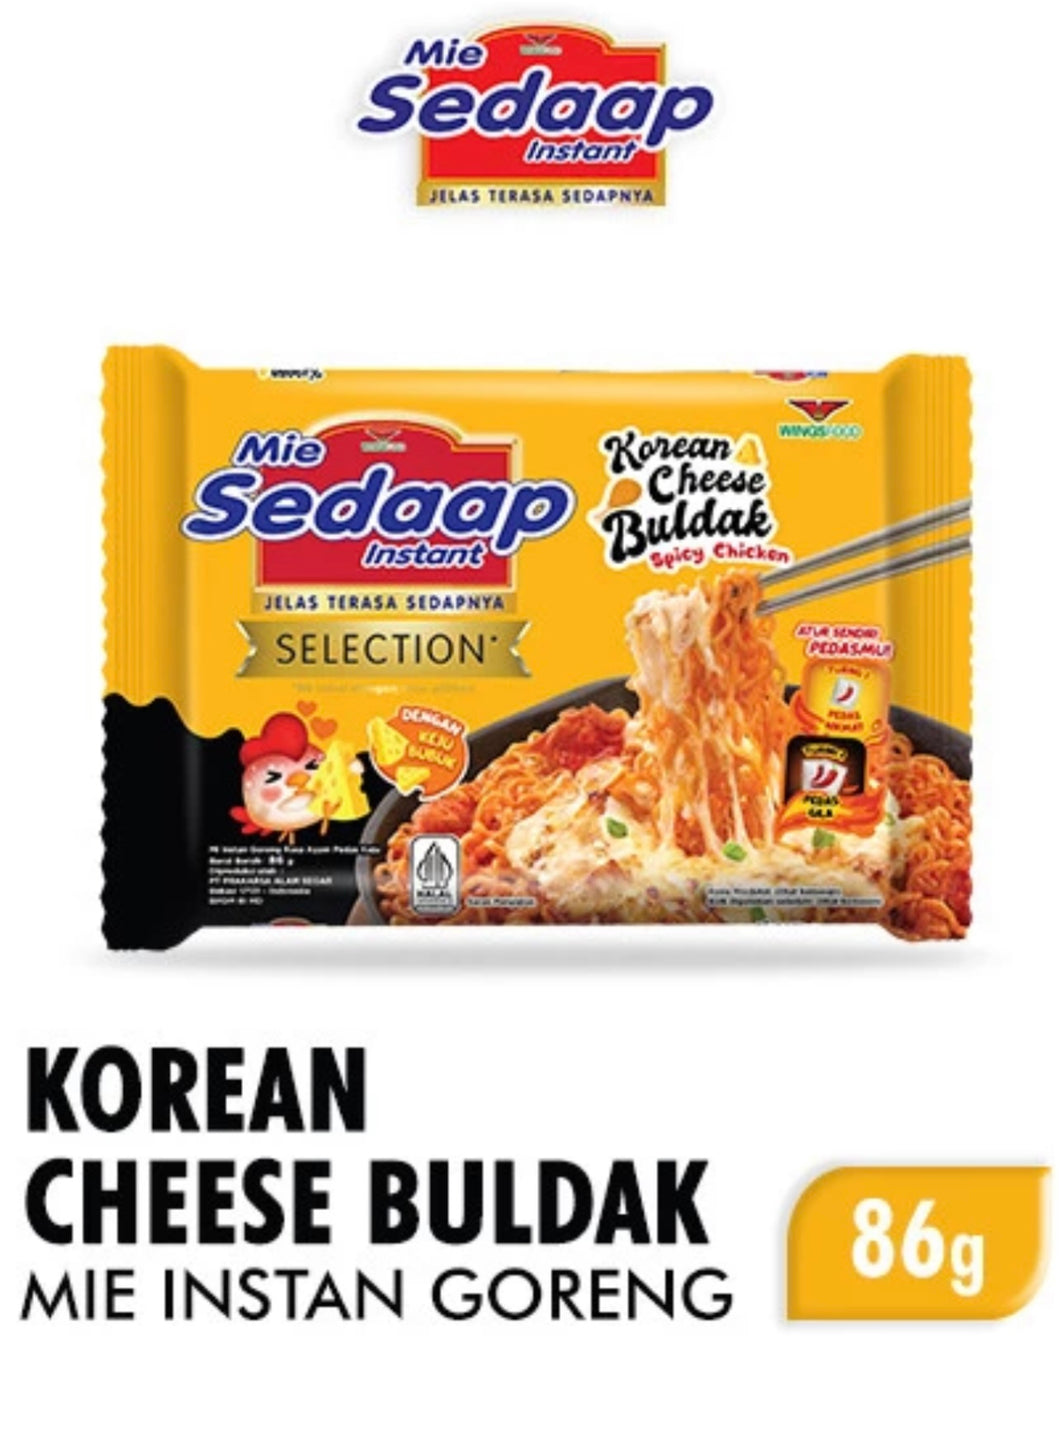 Mie Sedap Korean Cheese Buldak